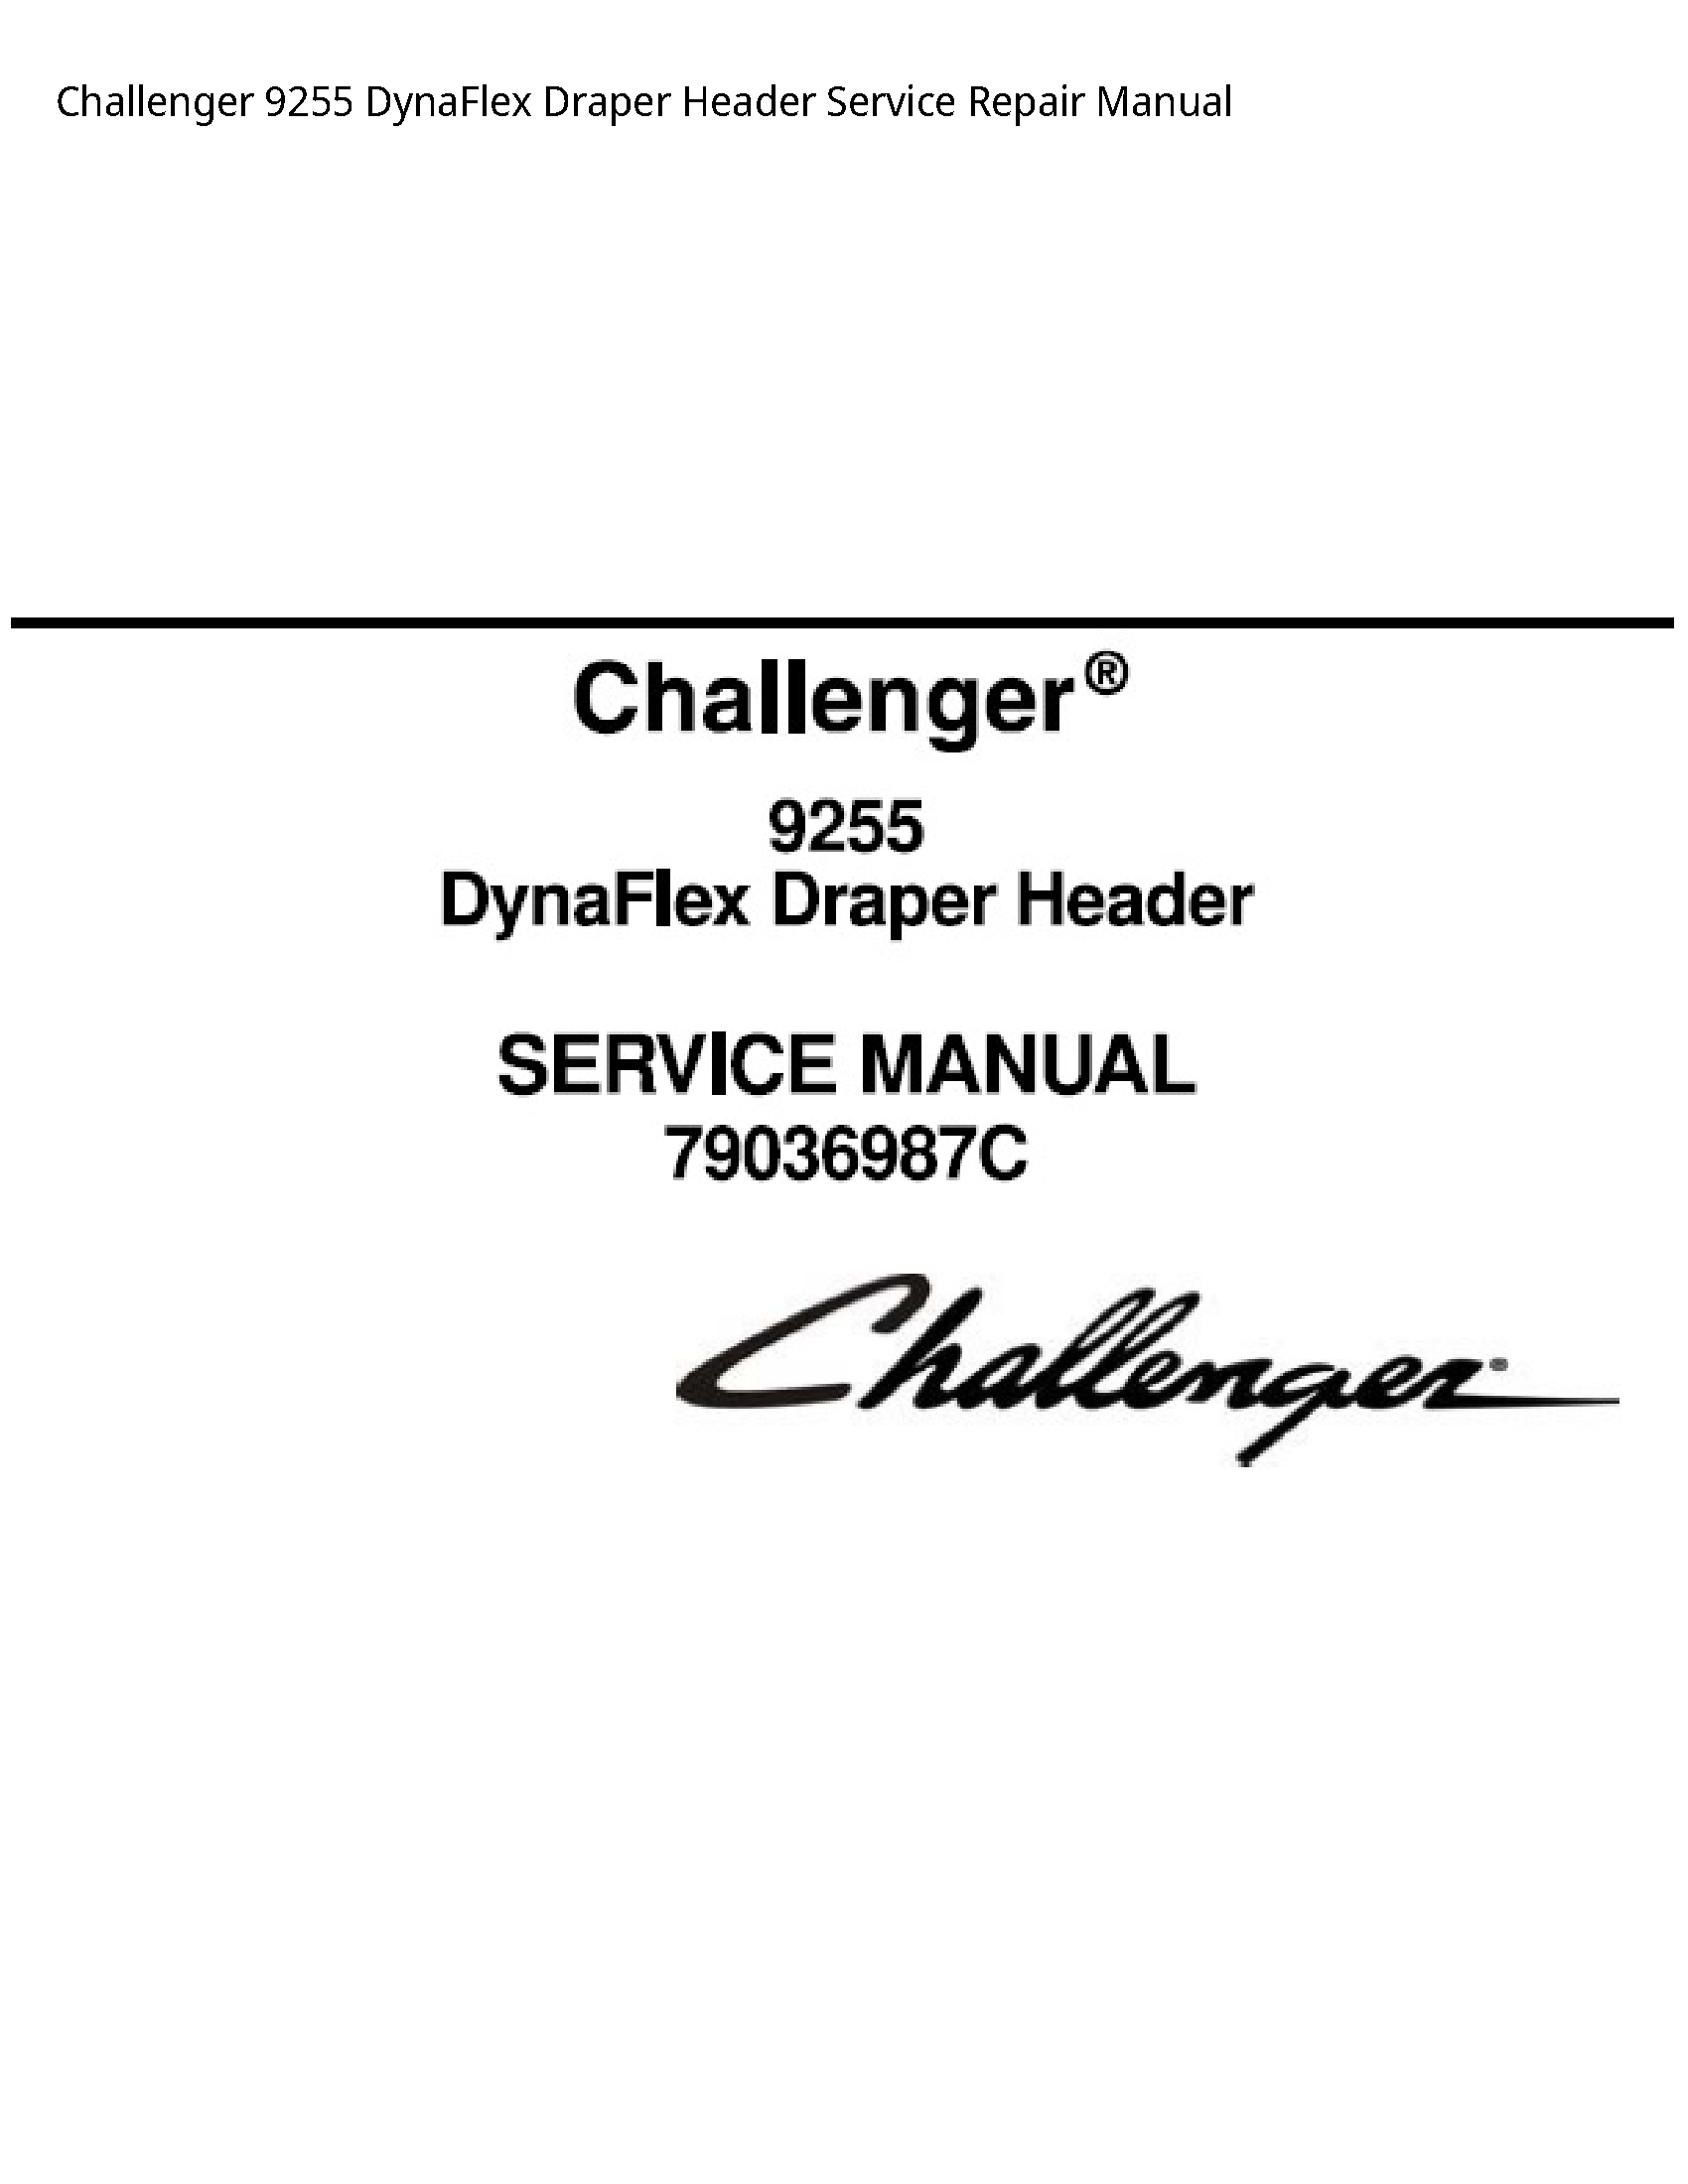 Challenger 9255 DynaFlex Draper Header manual